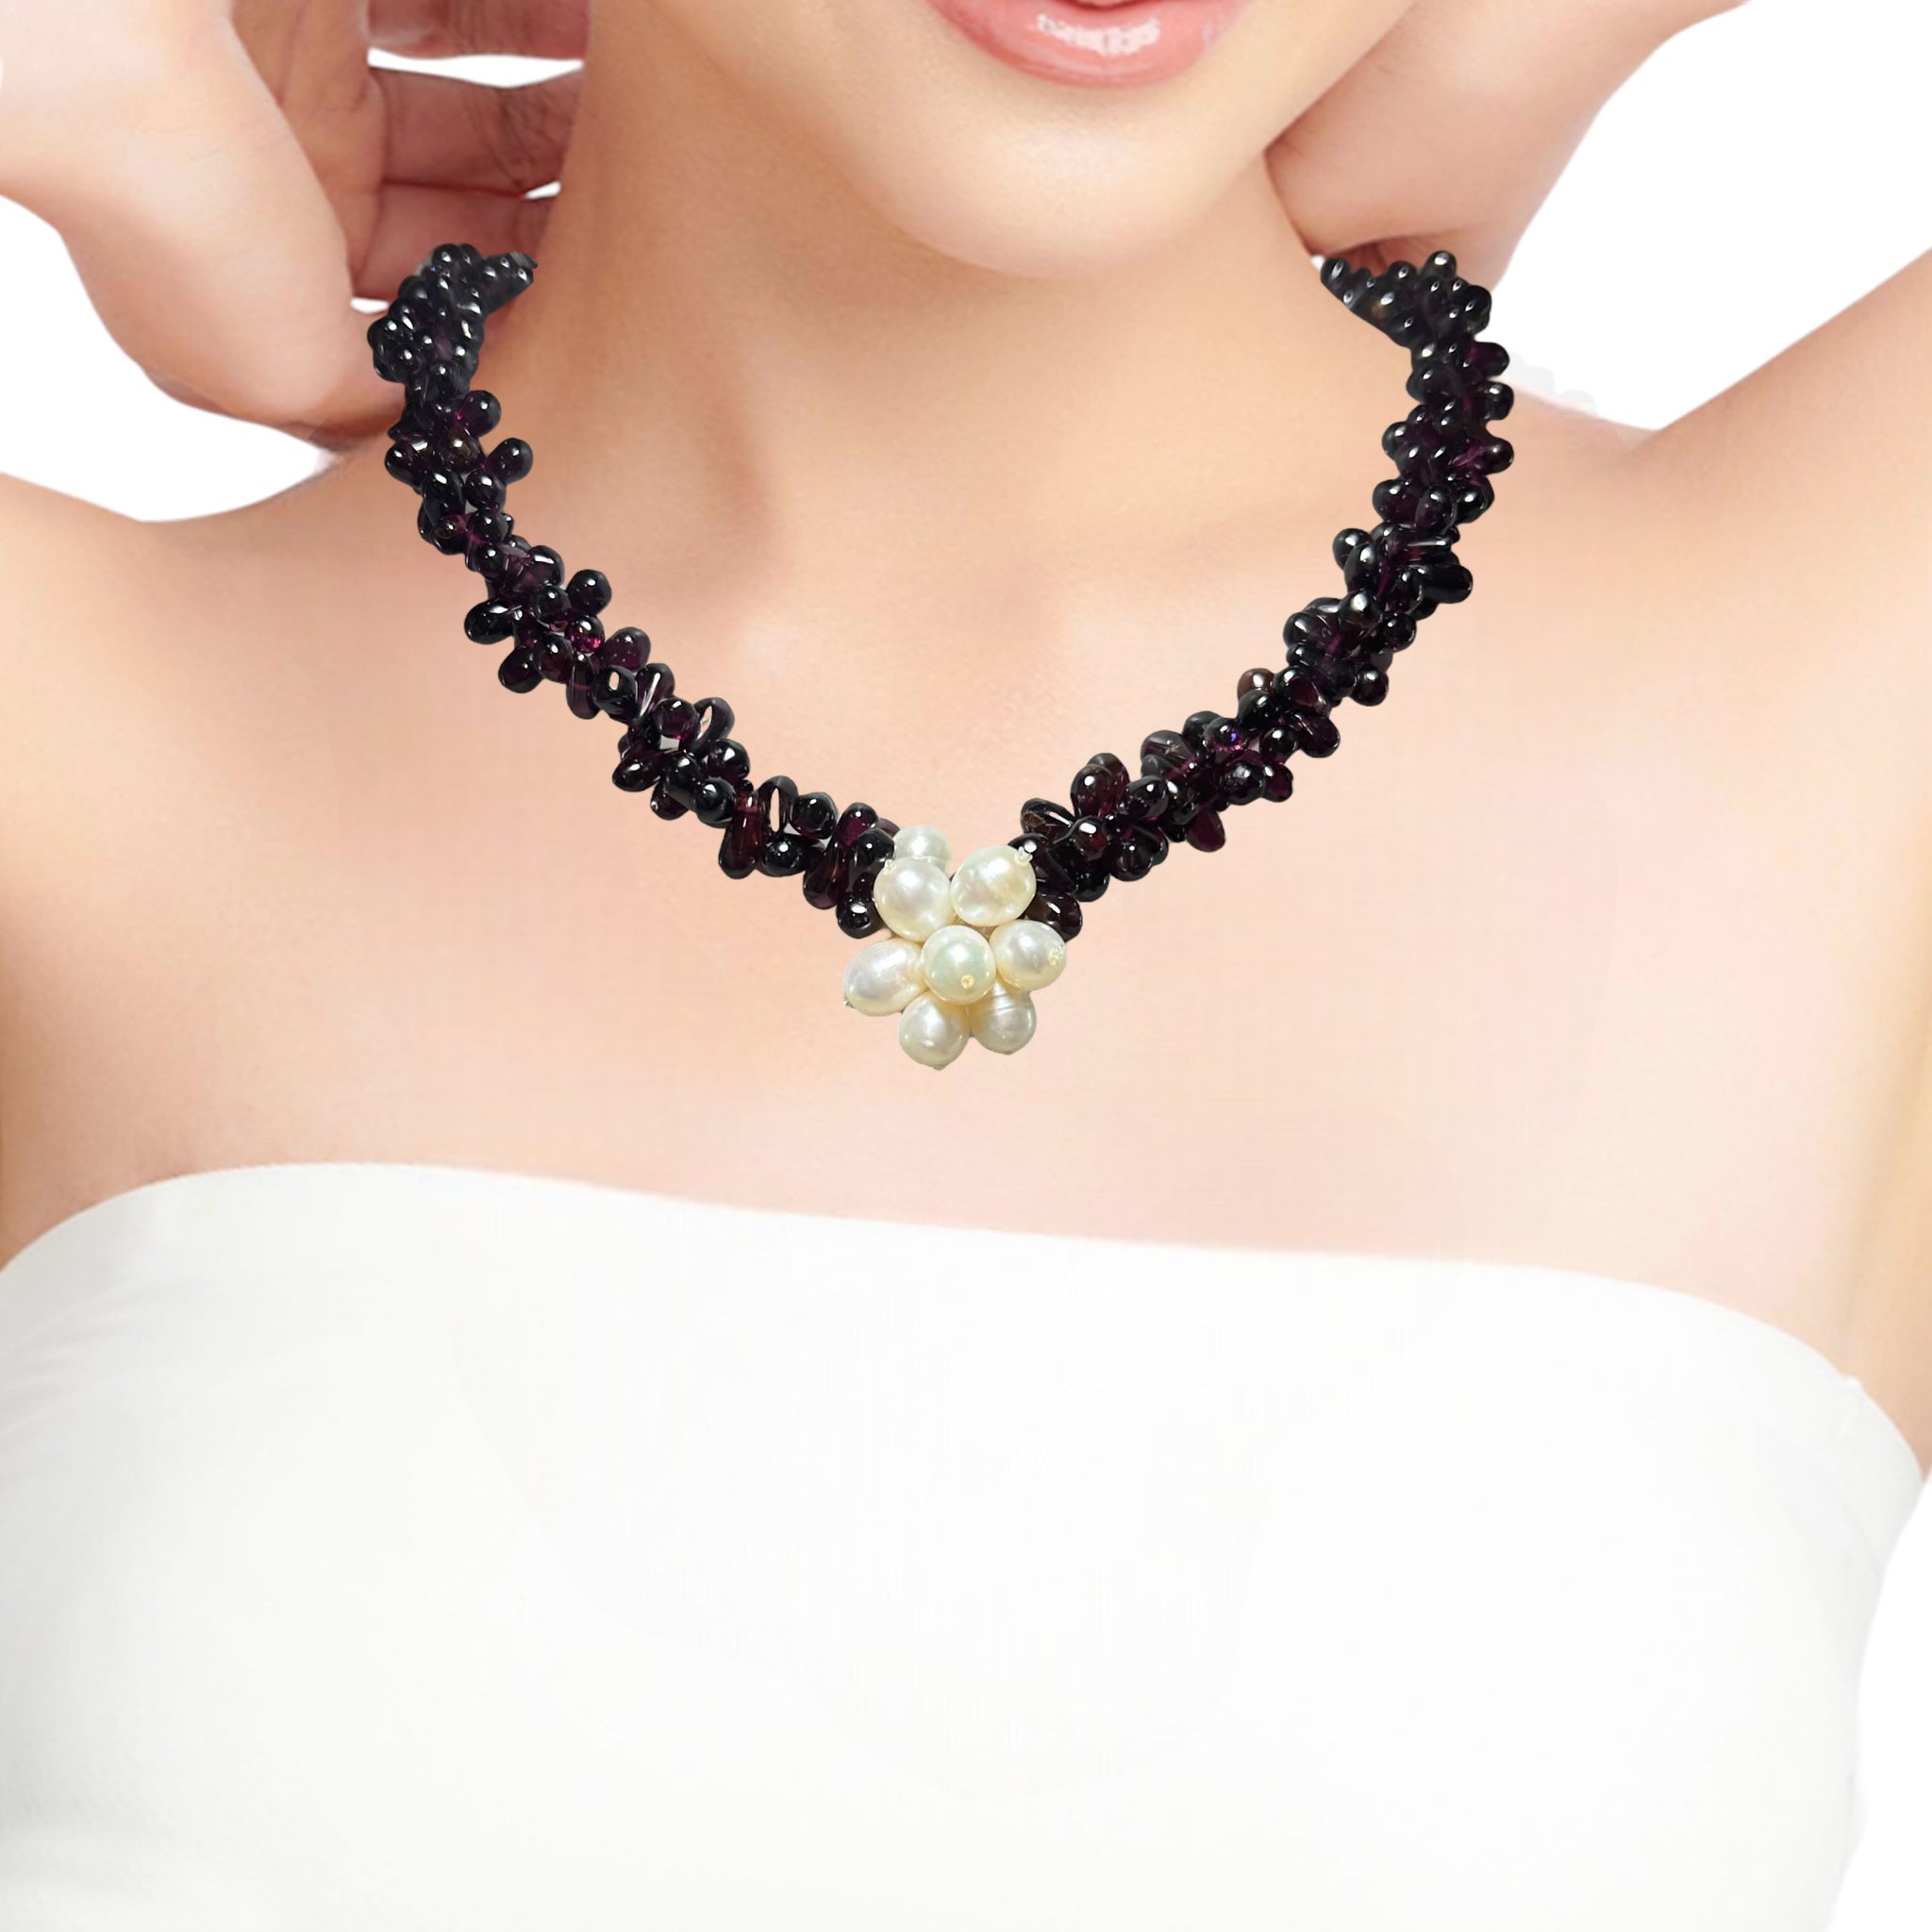 Natural Handmade Necklace 16"-18" Pear Drop Garnet Pearls Gemstone Beads Jewelry